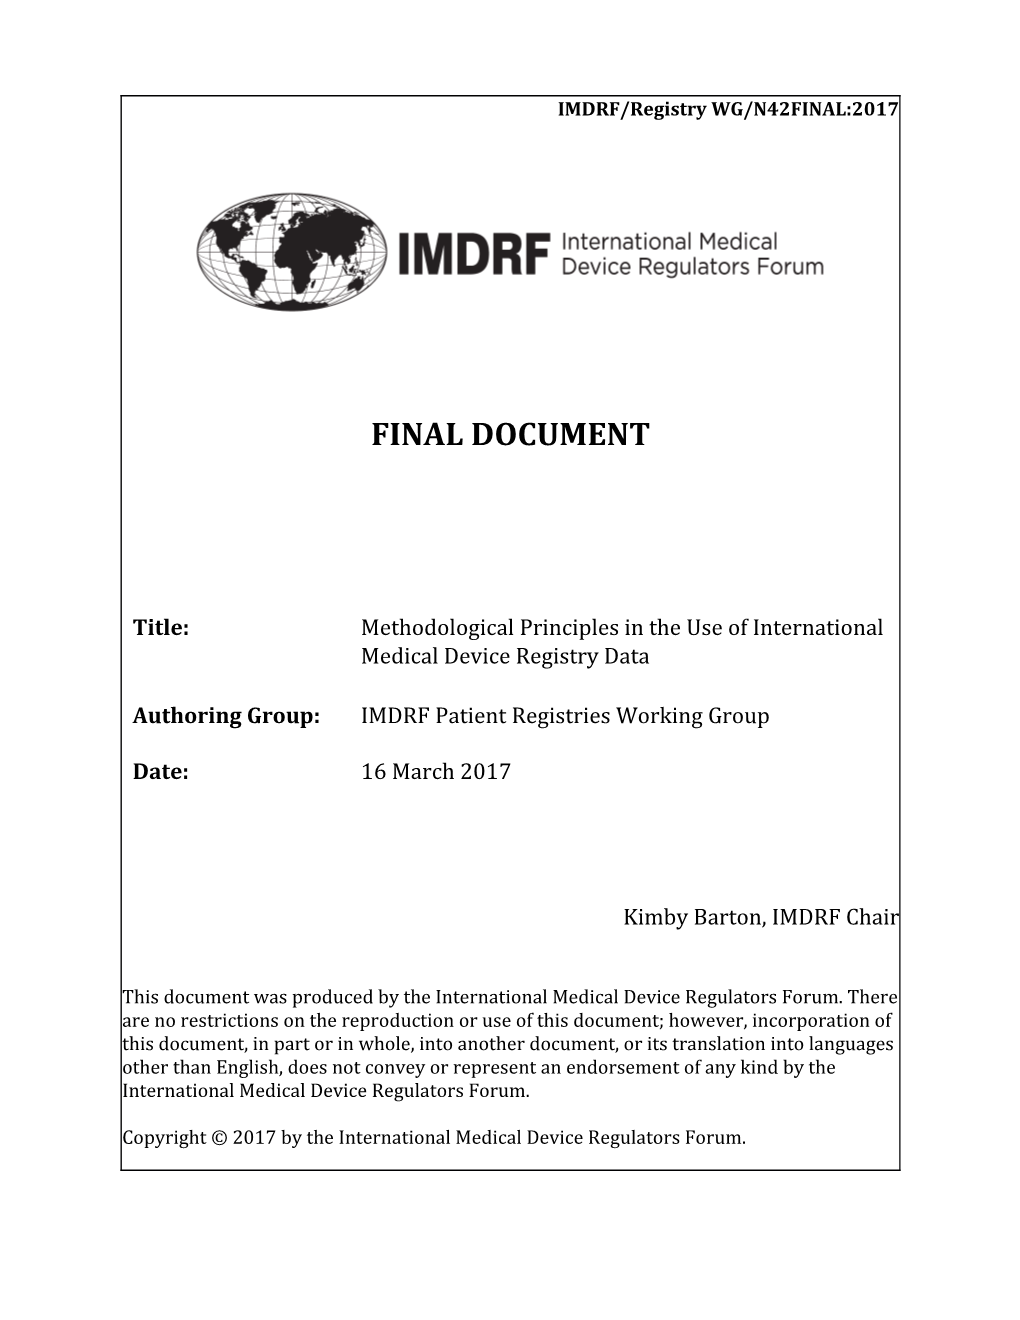 IMDRF: Methodological Principles in the Use of International Medical Device Registry Data